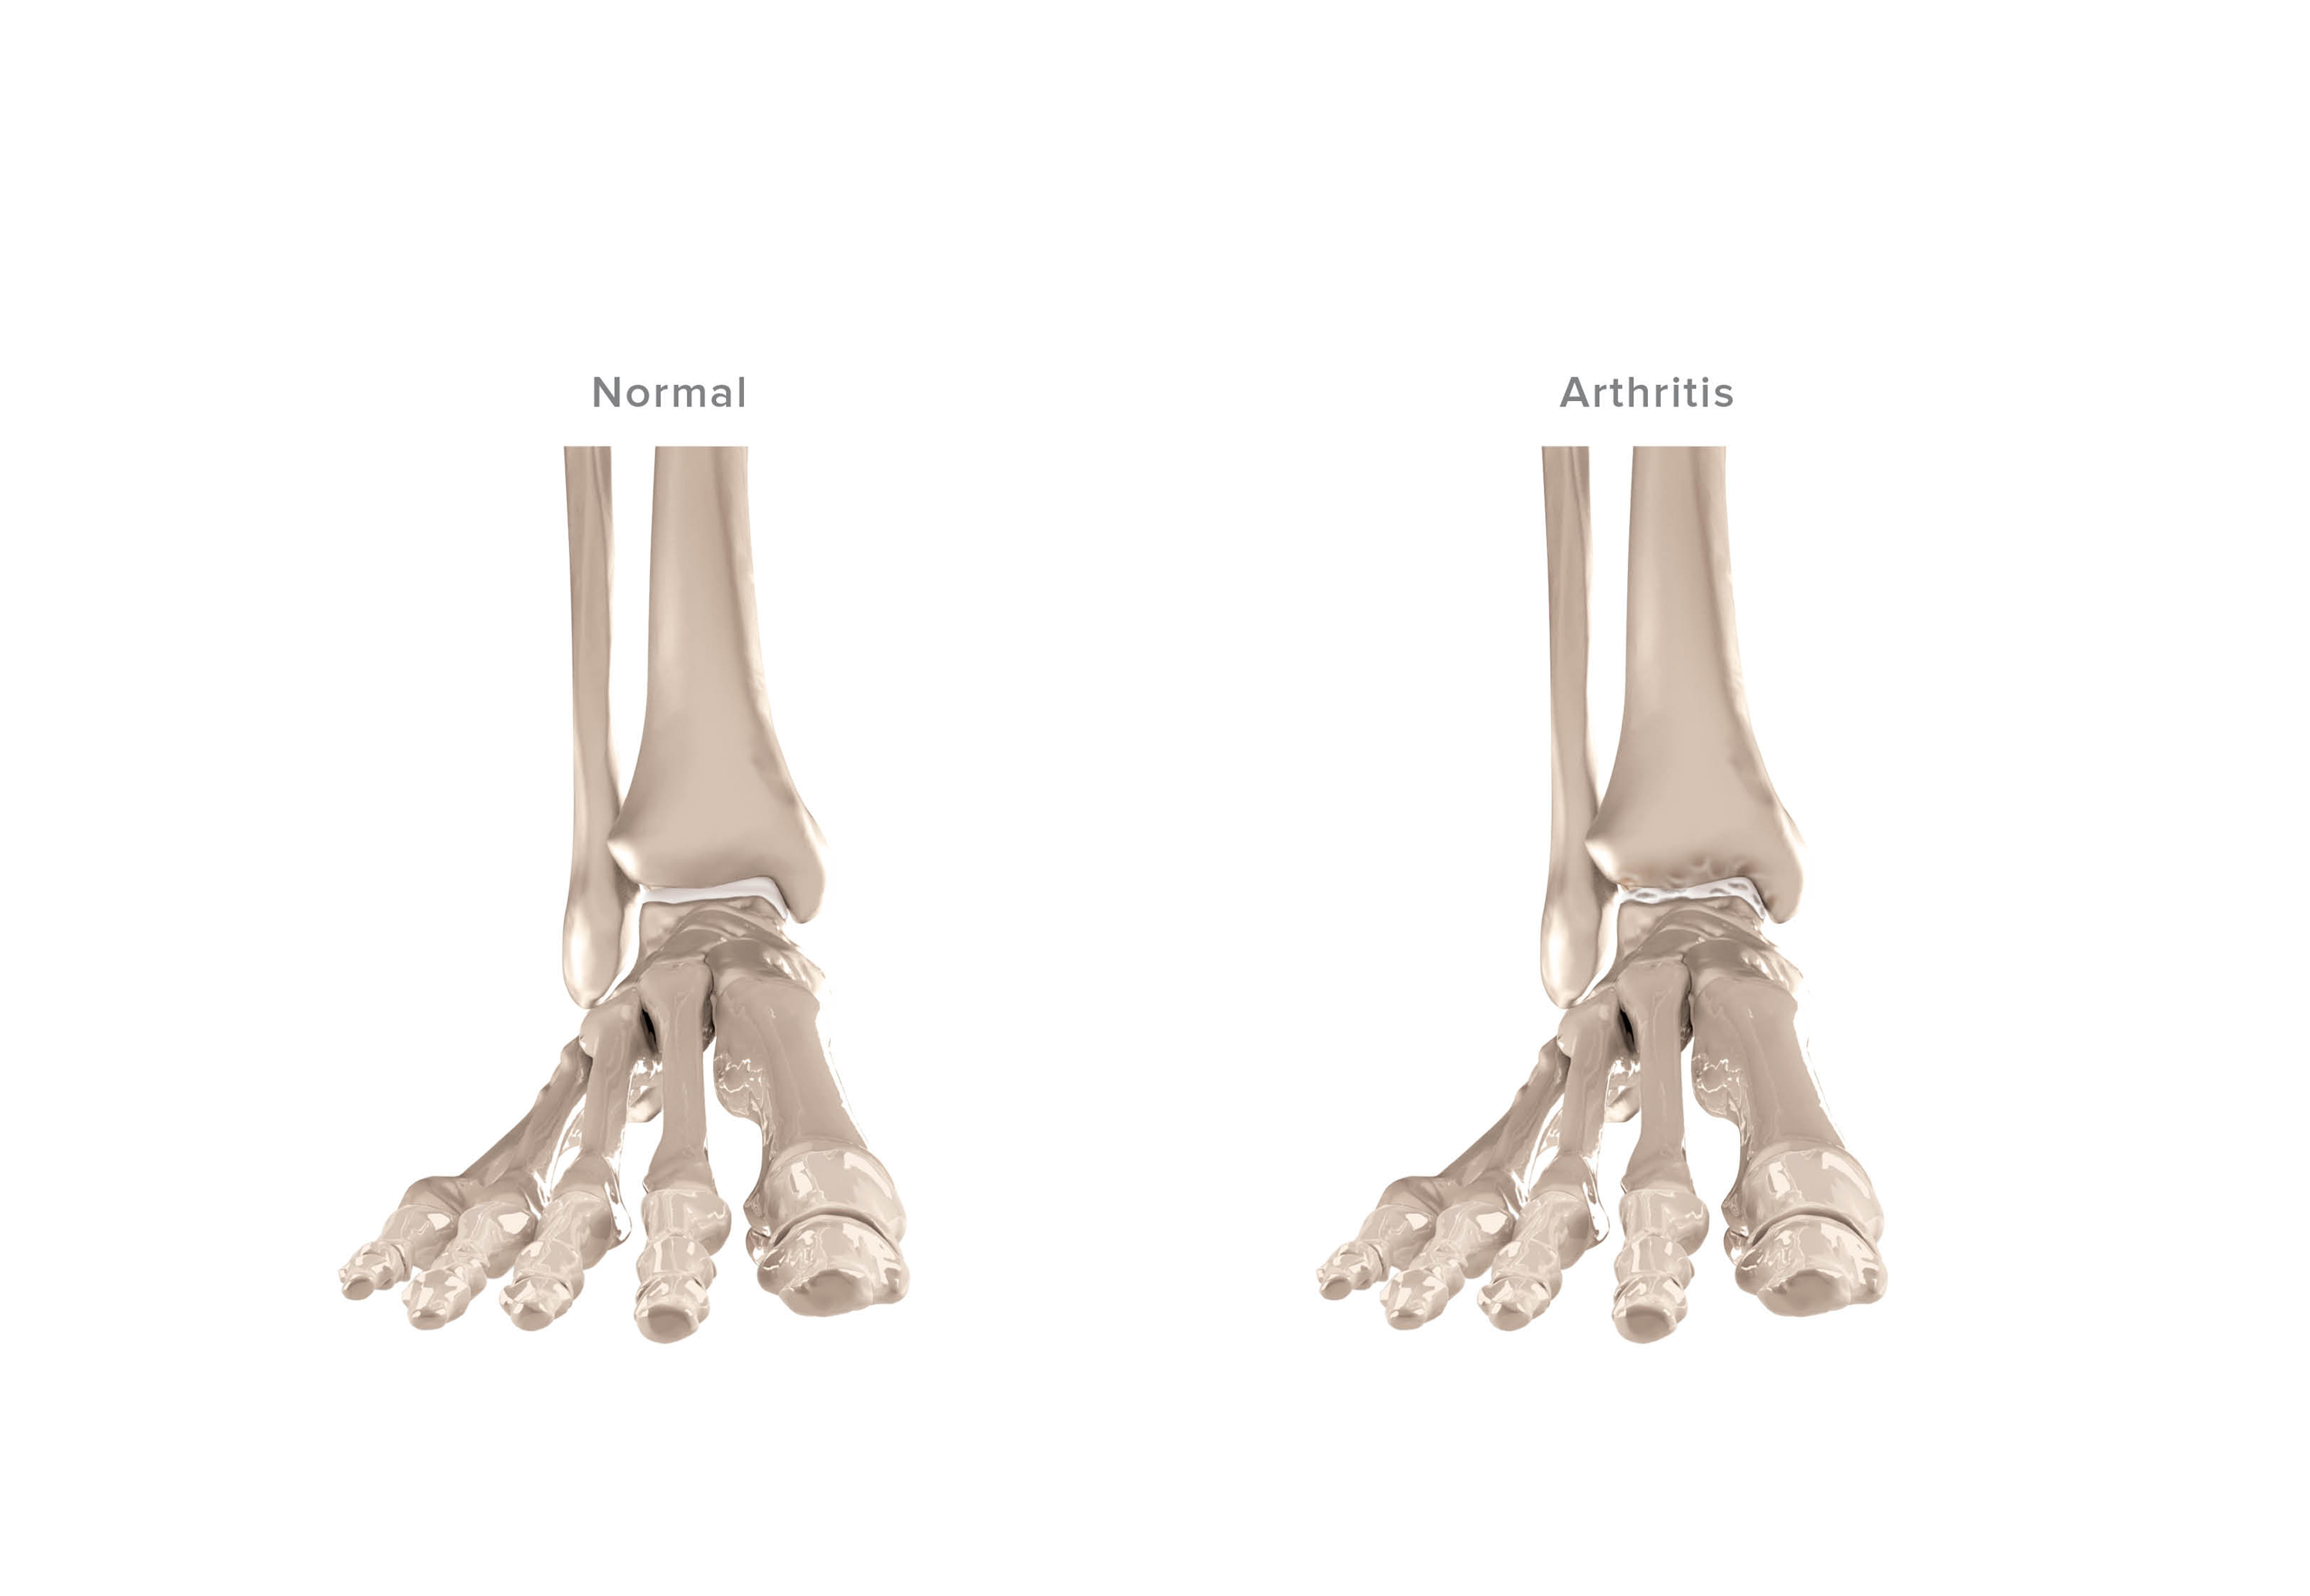 Ankle & Foot Arthritis